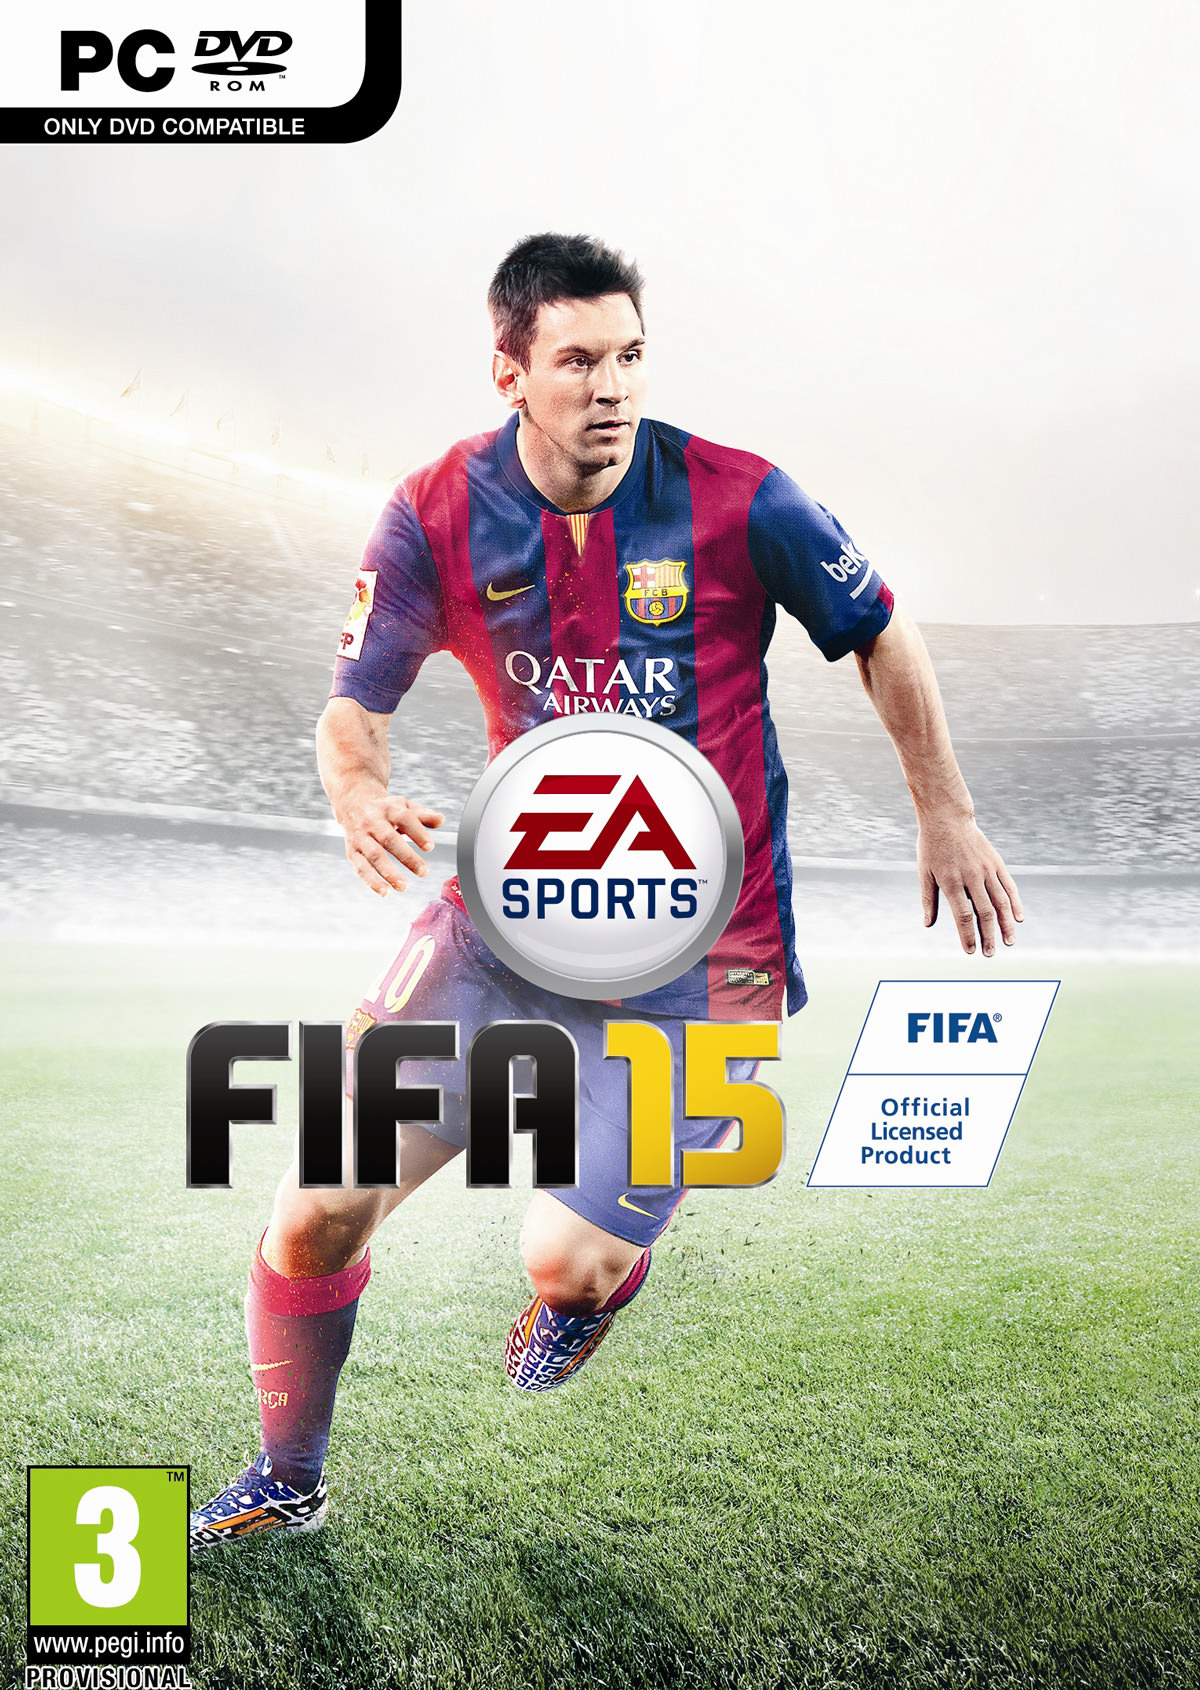 FIFA 15 Covers (Packshots) – FIFPlay